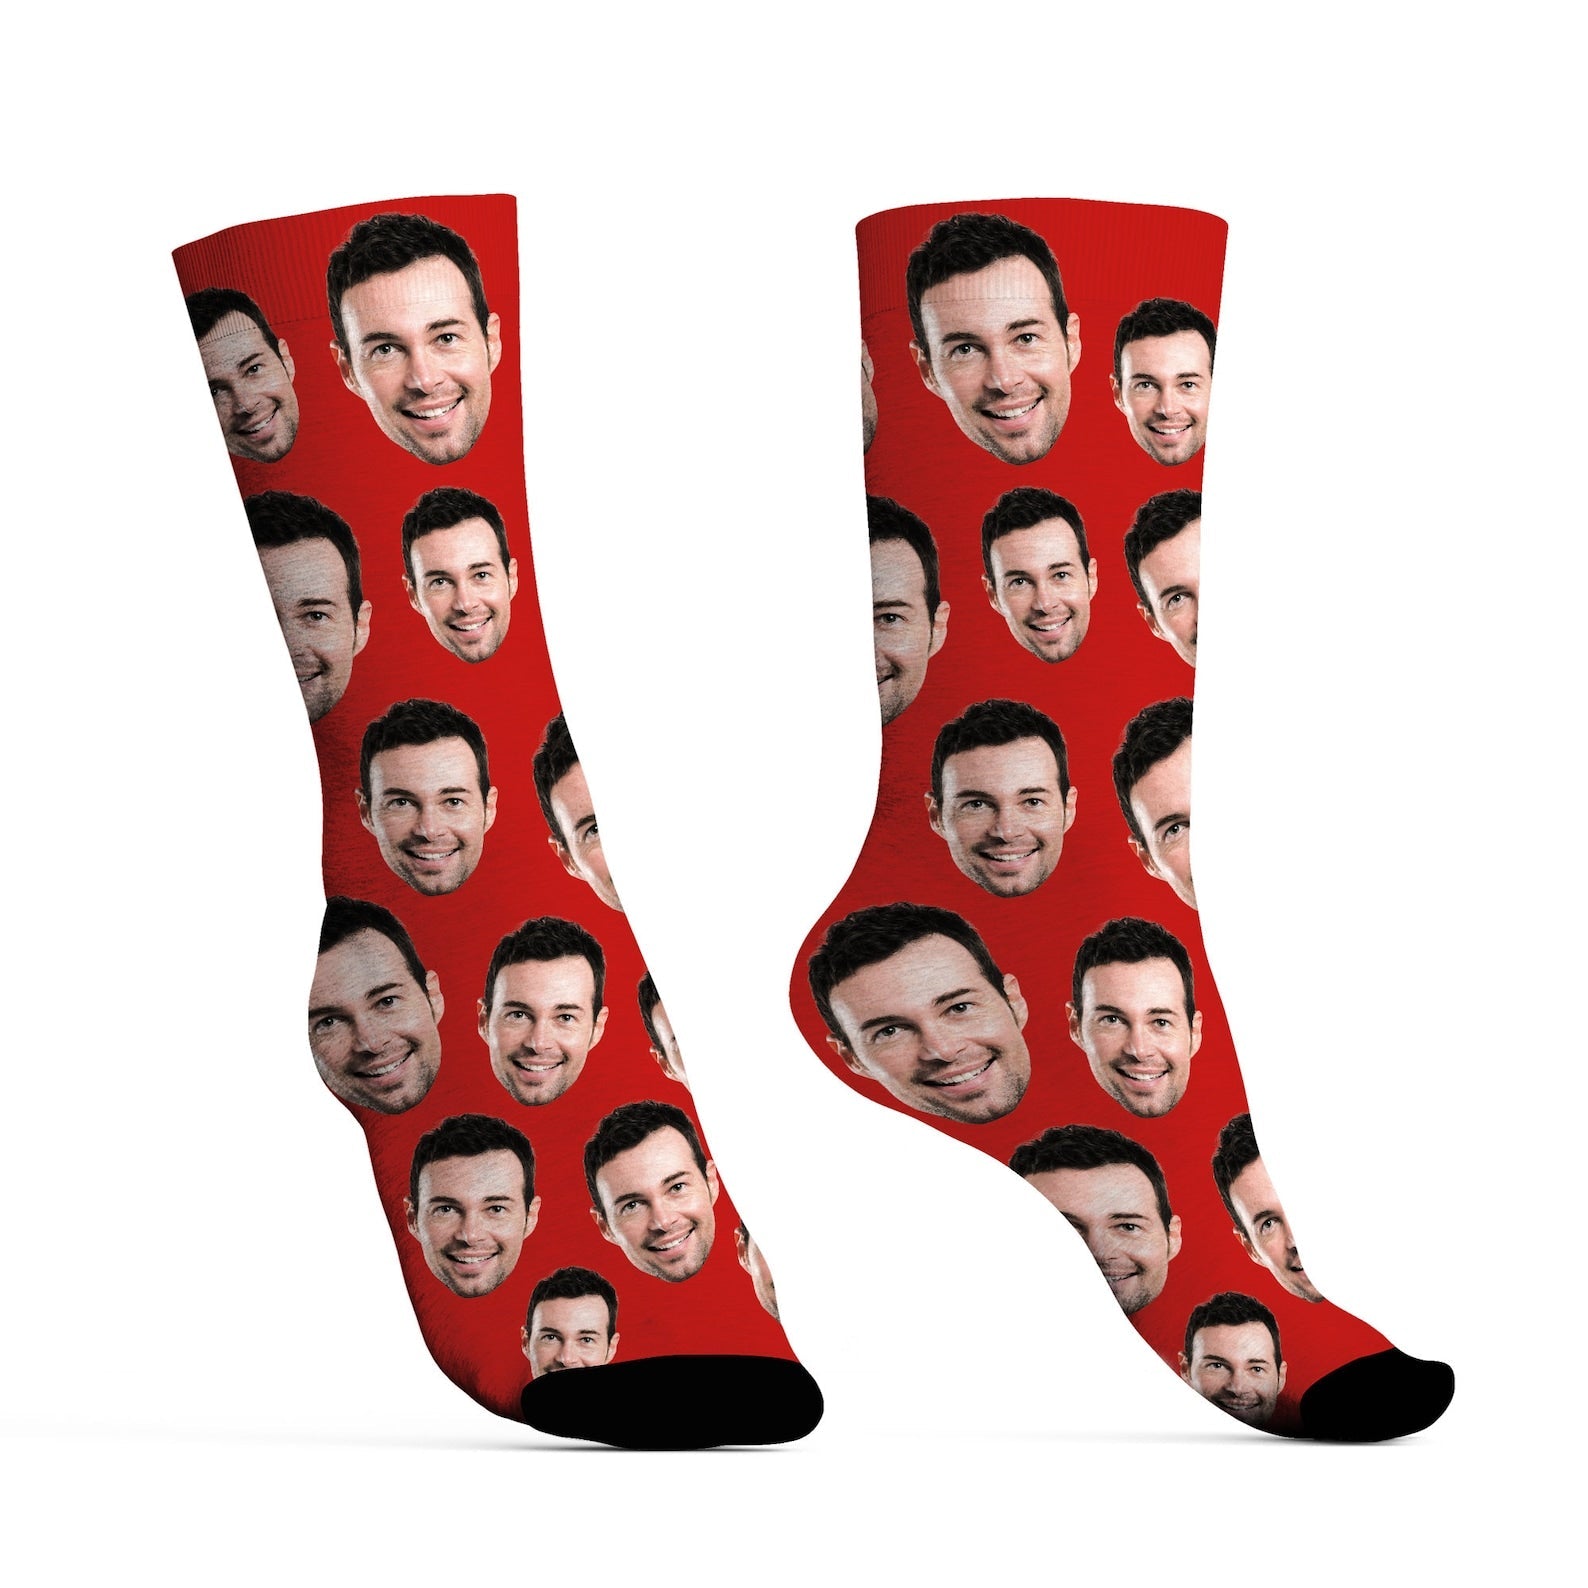 Personalized Socks with Custom Photos